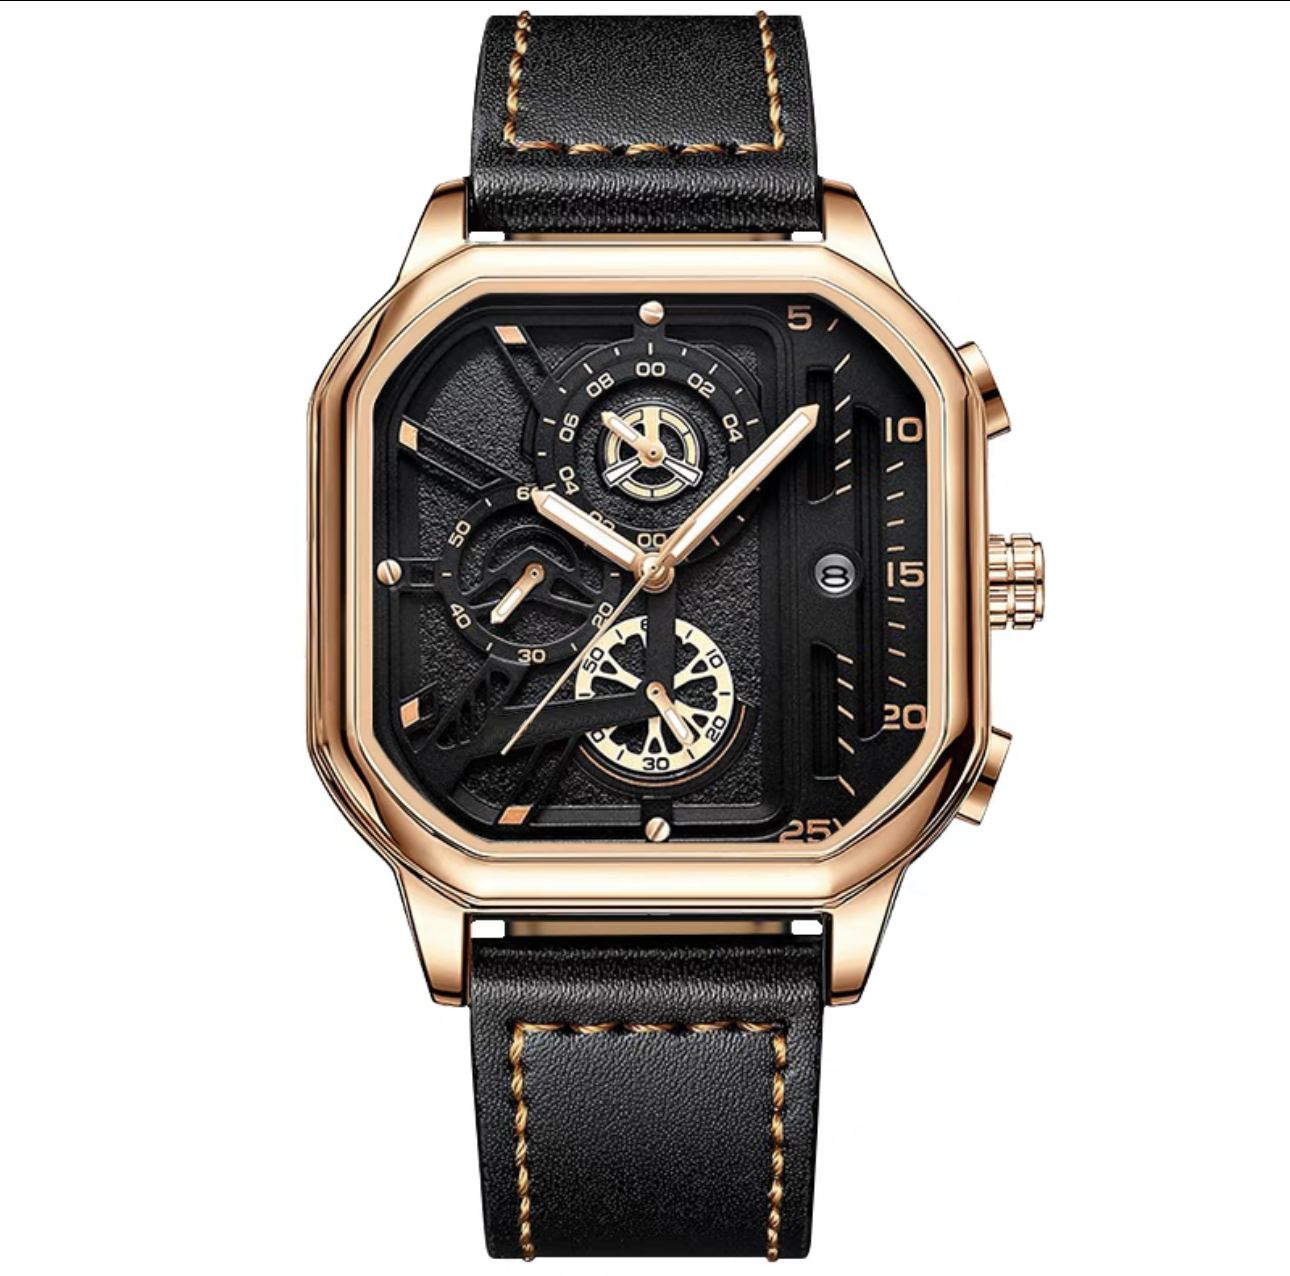 Top Brand Luxury Design New Reloj Hombre Luminous Sports Men's Watches